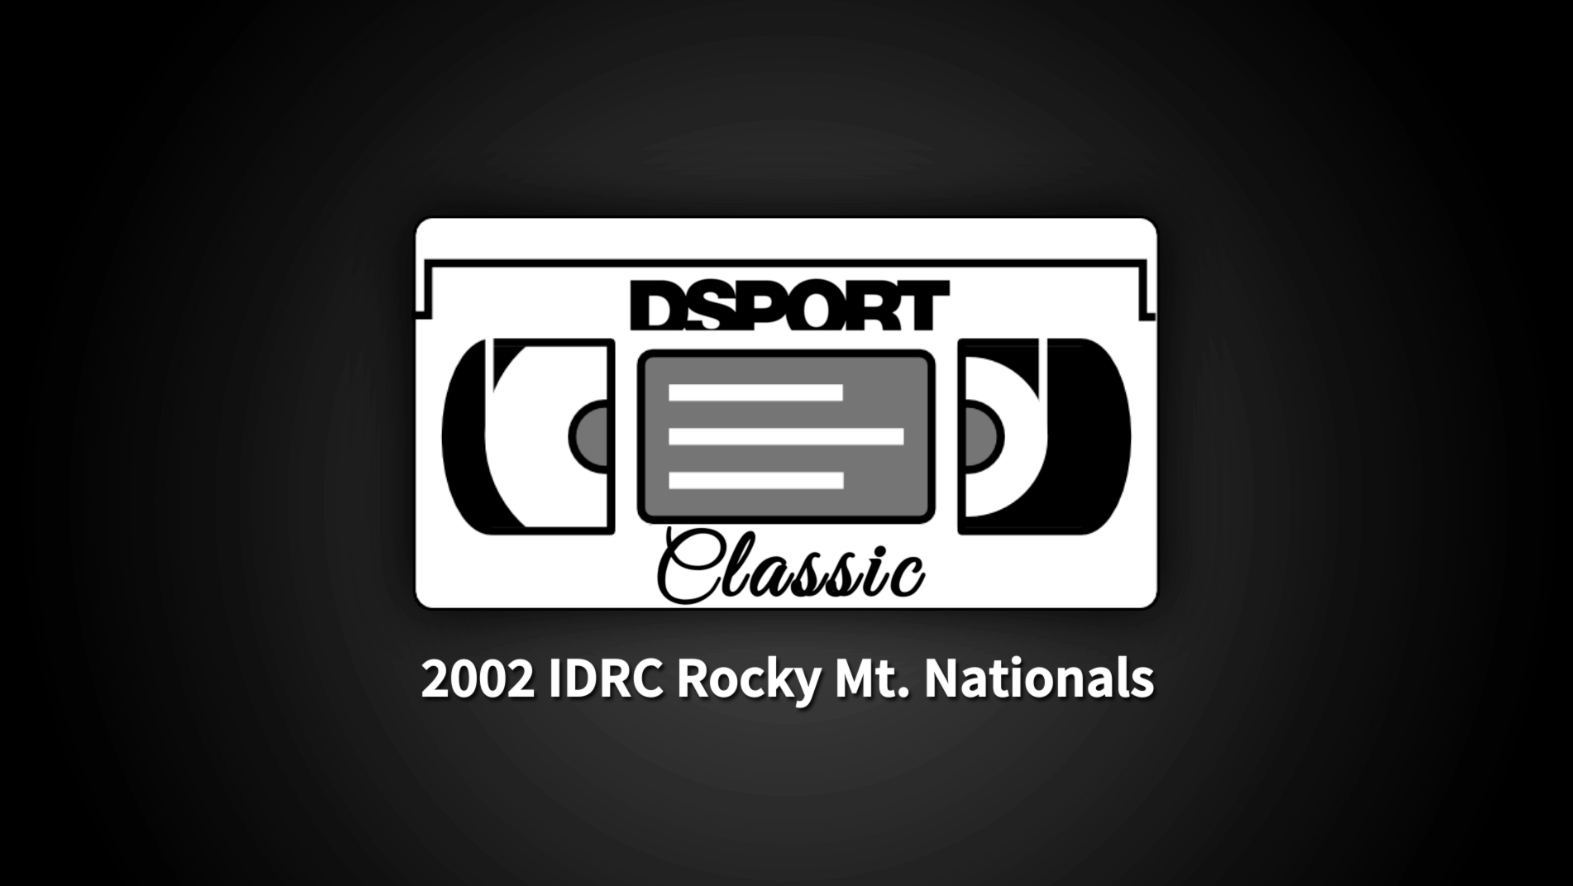 DSPORT Classic: 2002 IDRC Rocky Mt. Nationals